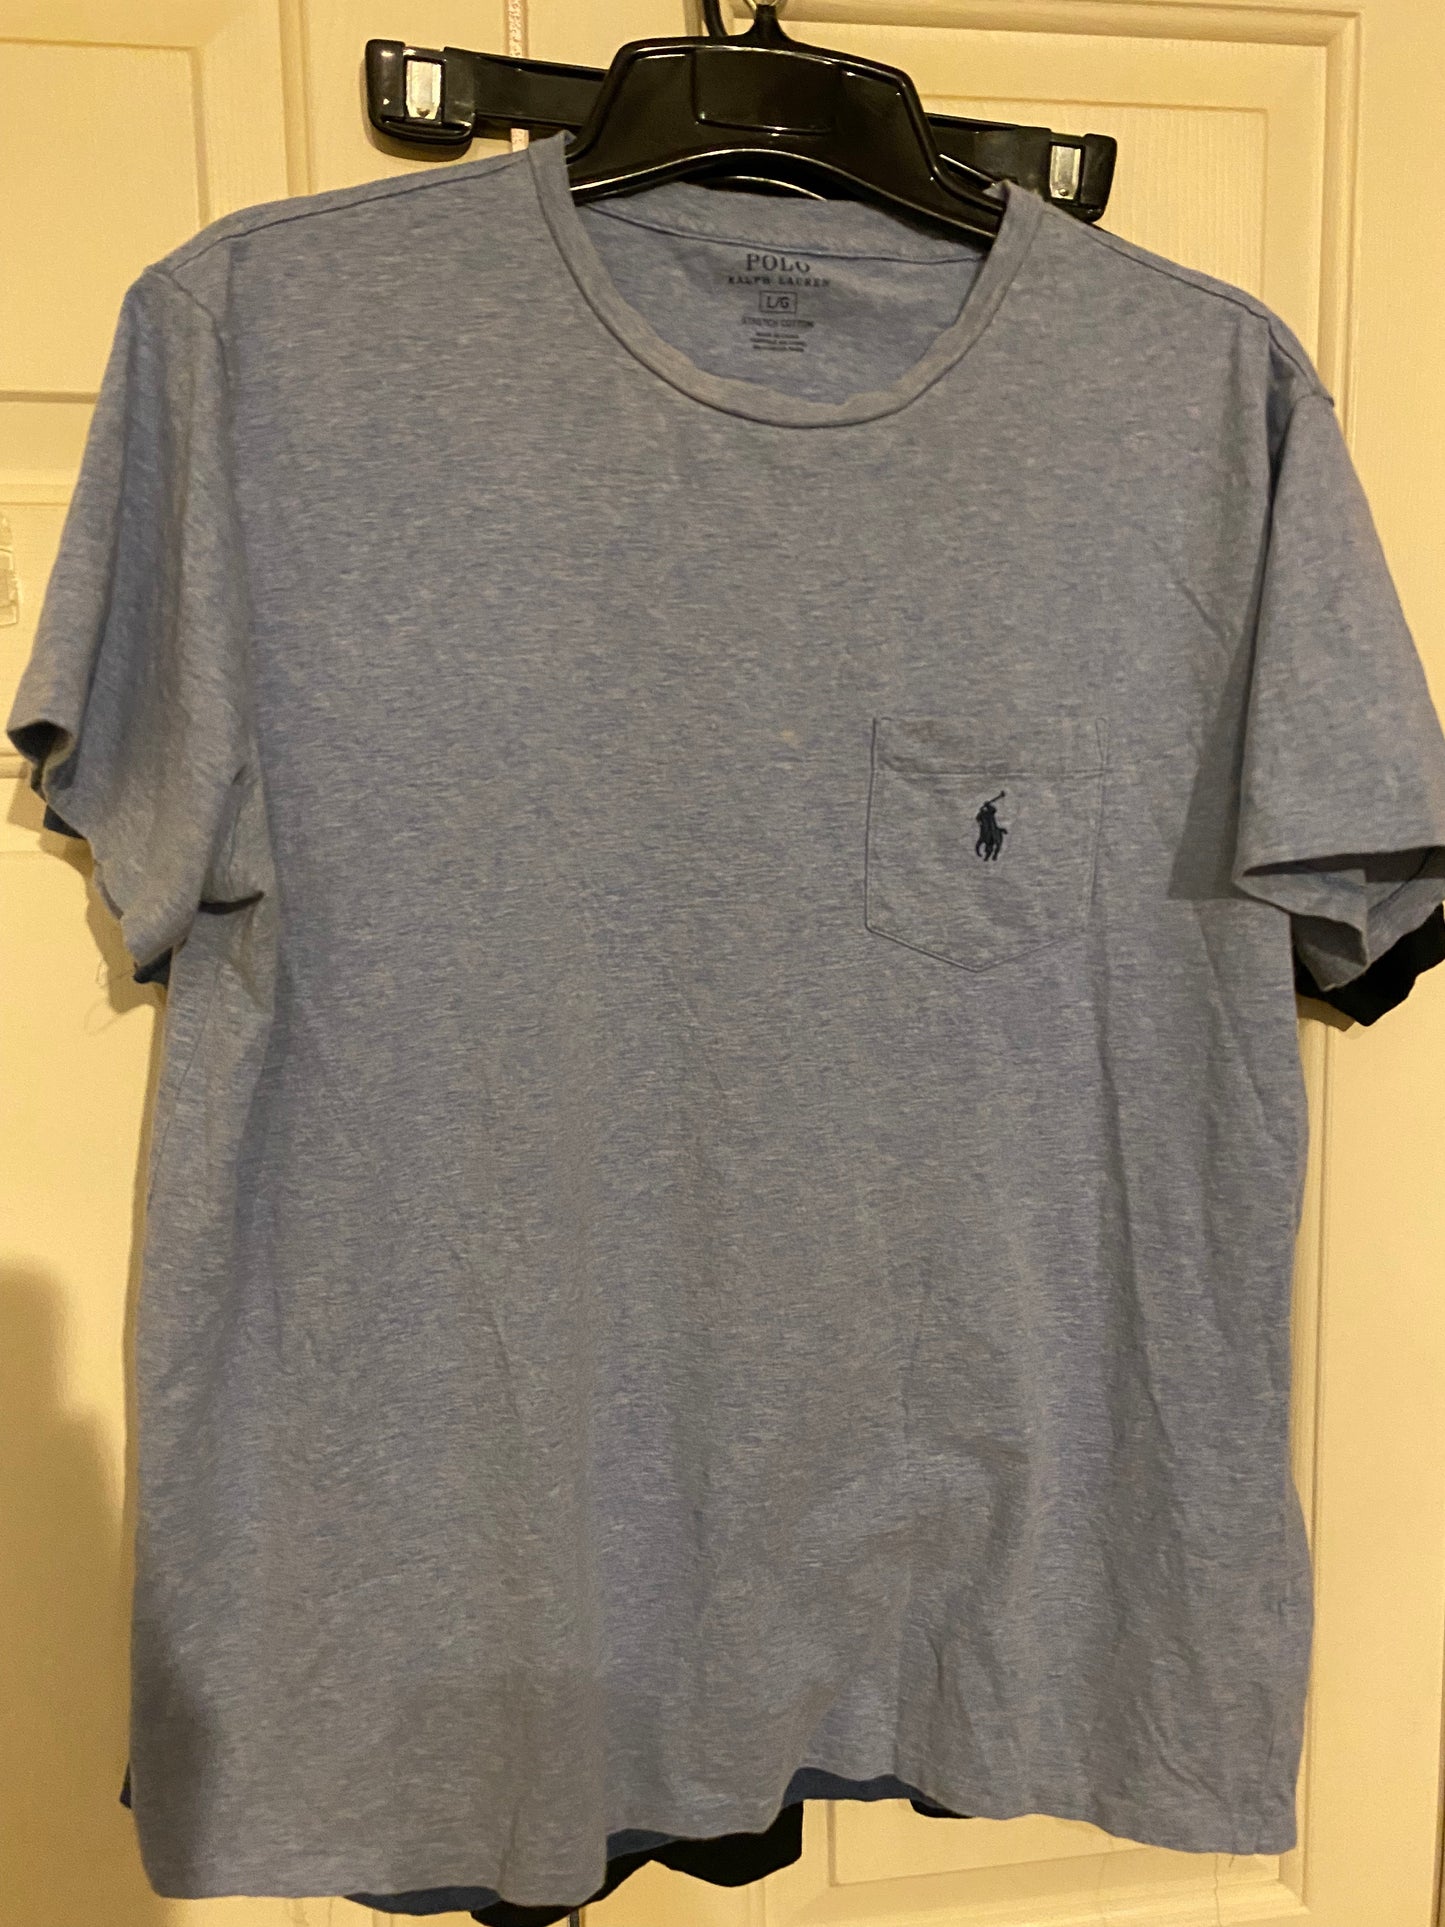 Polo Ralph Lauren Classic Fit Gray Pocket T Shirt Size Large